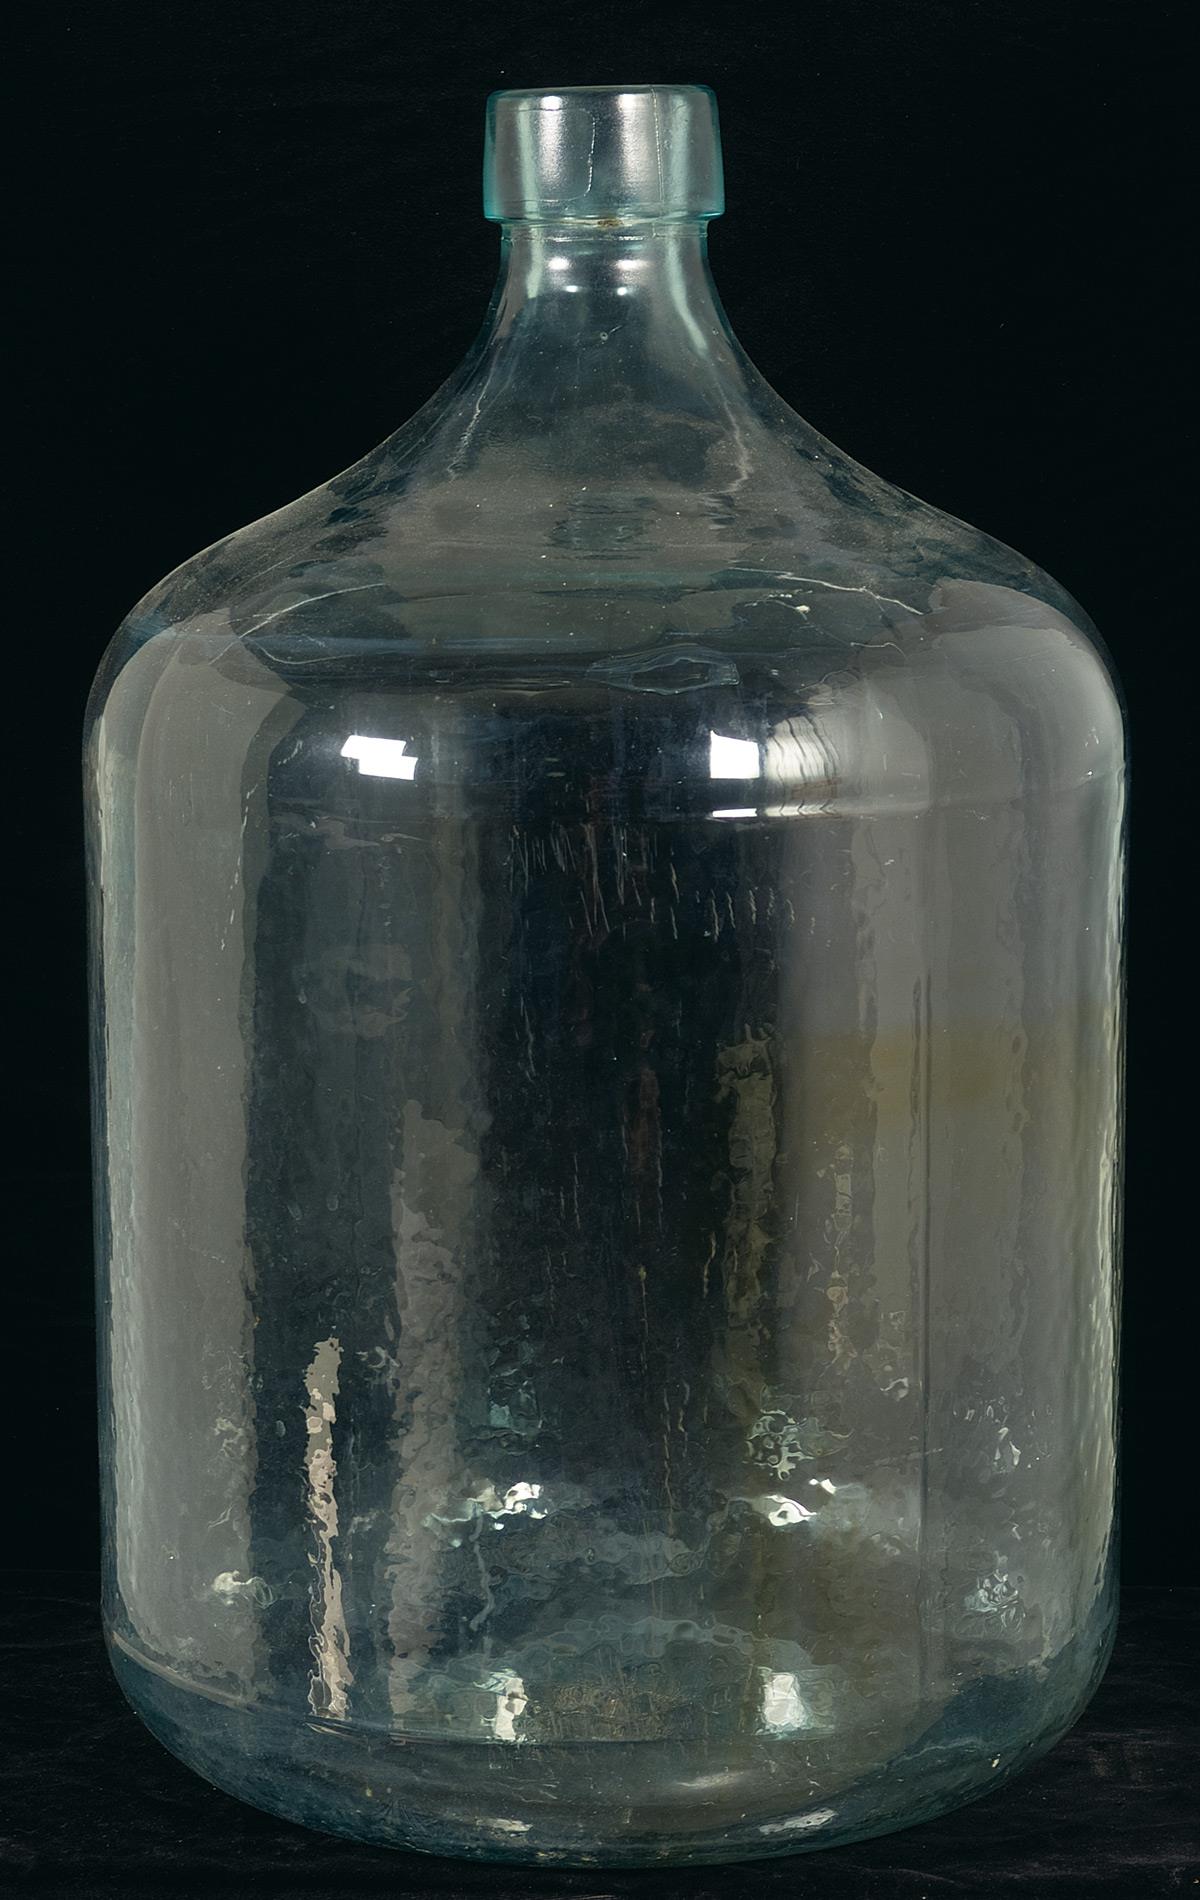 Large Glass Bottle